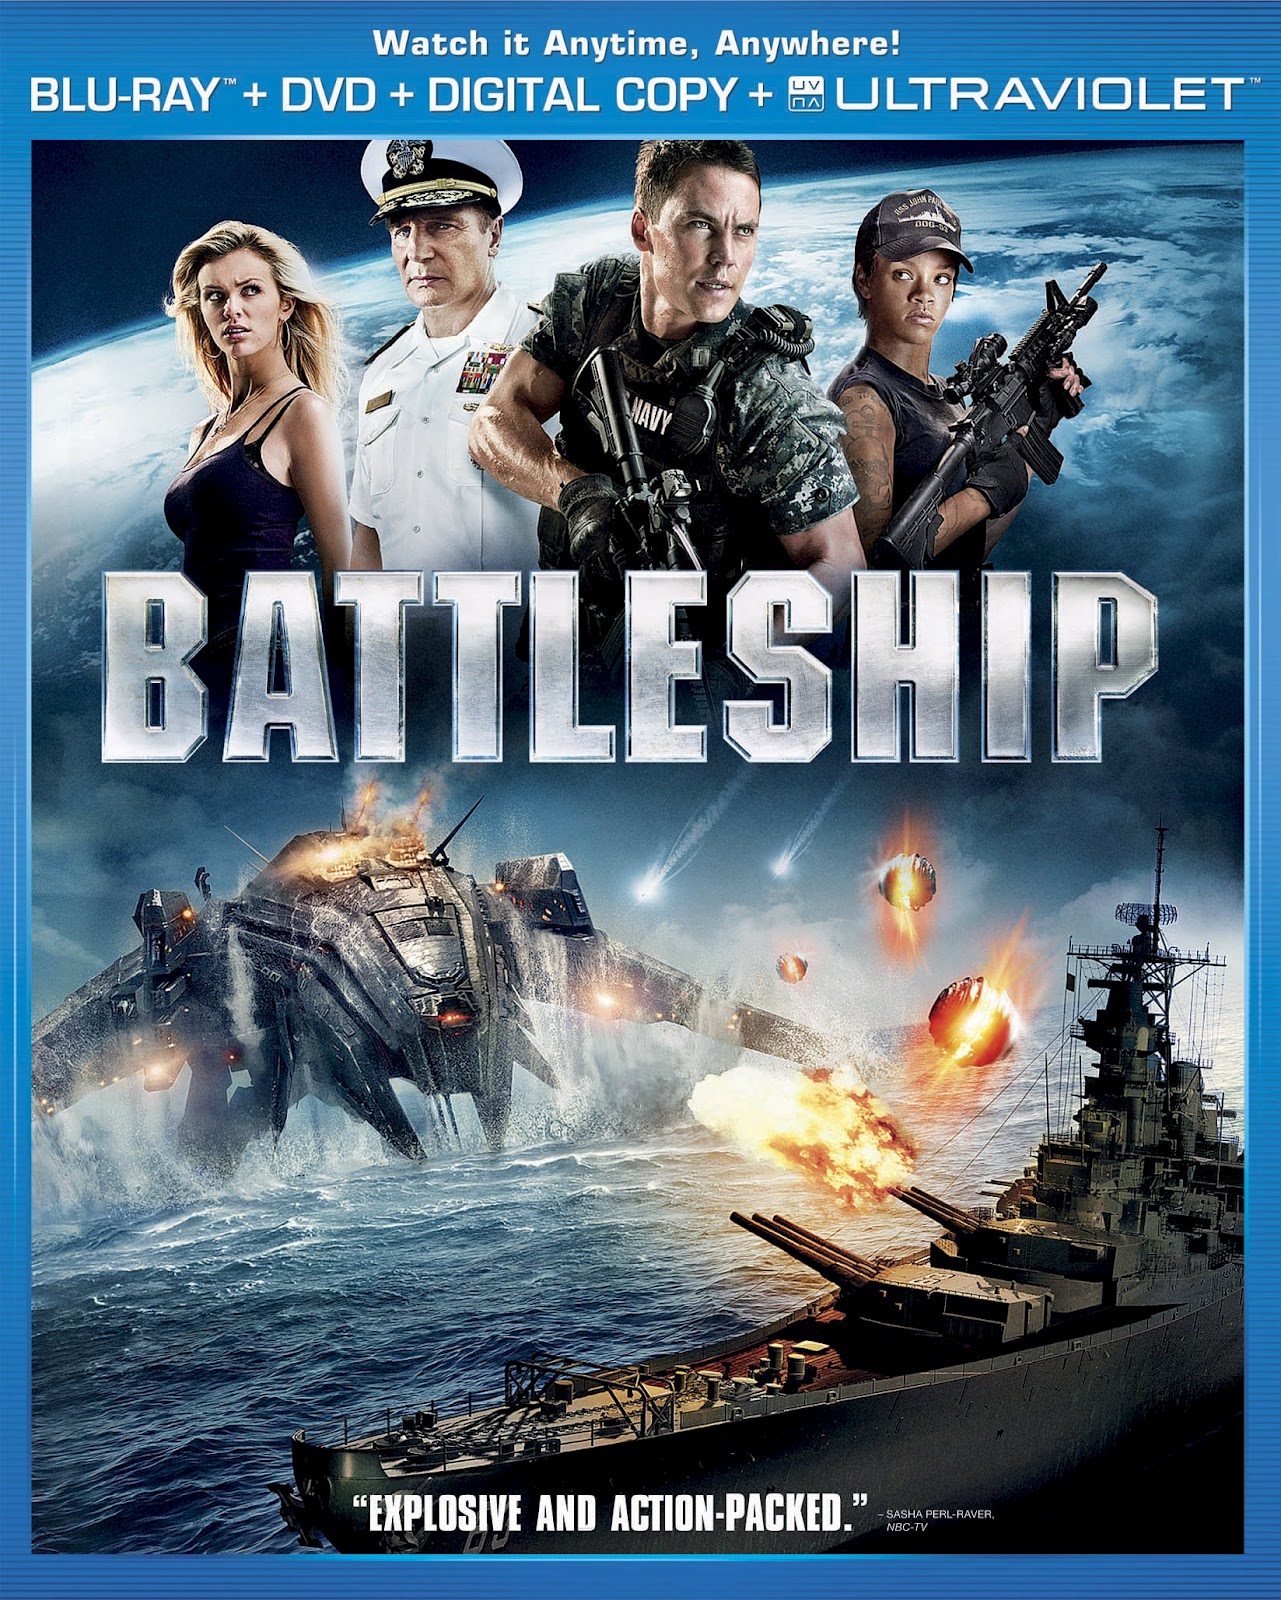 https://blogger.googleusercontent.com/img/b/R29vZ2xl/AVvXsEjDaYF8FDedAftAKNPK4-LnQScJbQXGjEHKc17WLjuEXEpJLpnCF1UsfELUm1hDKLS99SuoWg9FonYQjxStGuFUfqYsfFxdWxdxpRy8TQsgVaj5GNn13B3OvPSruU2zPcMqUC3V3_nMK8Wu/s1600/battleship-blu-ray-cover-71.jpg